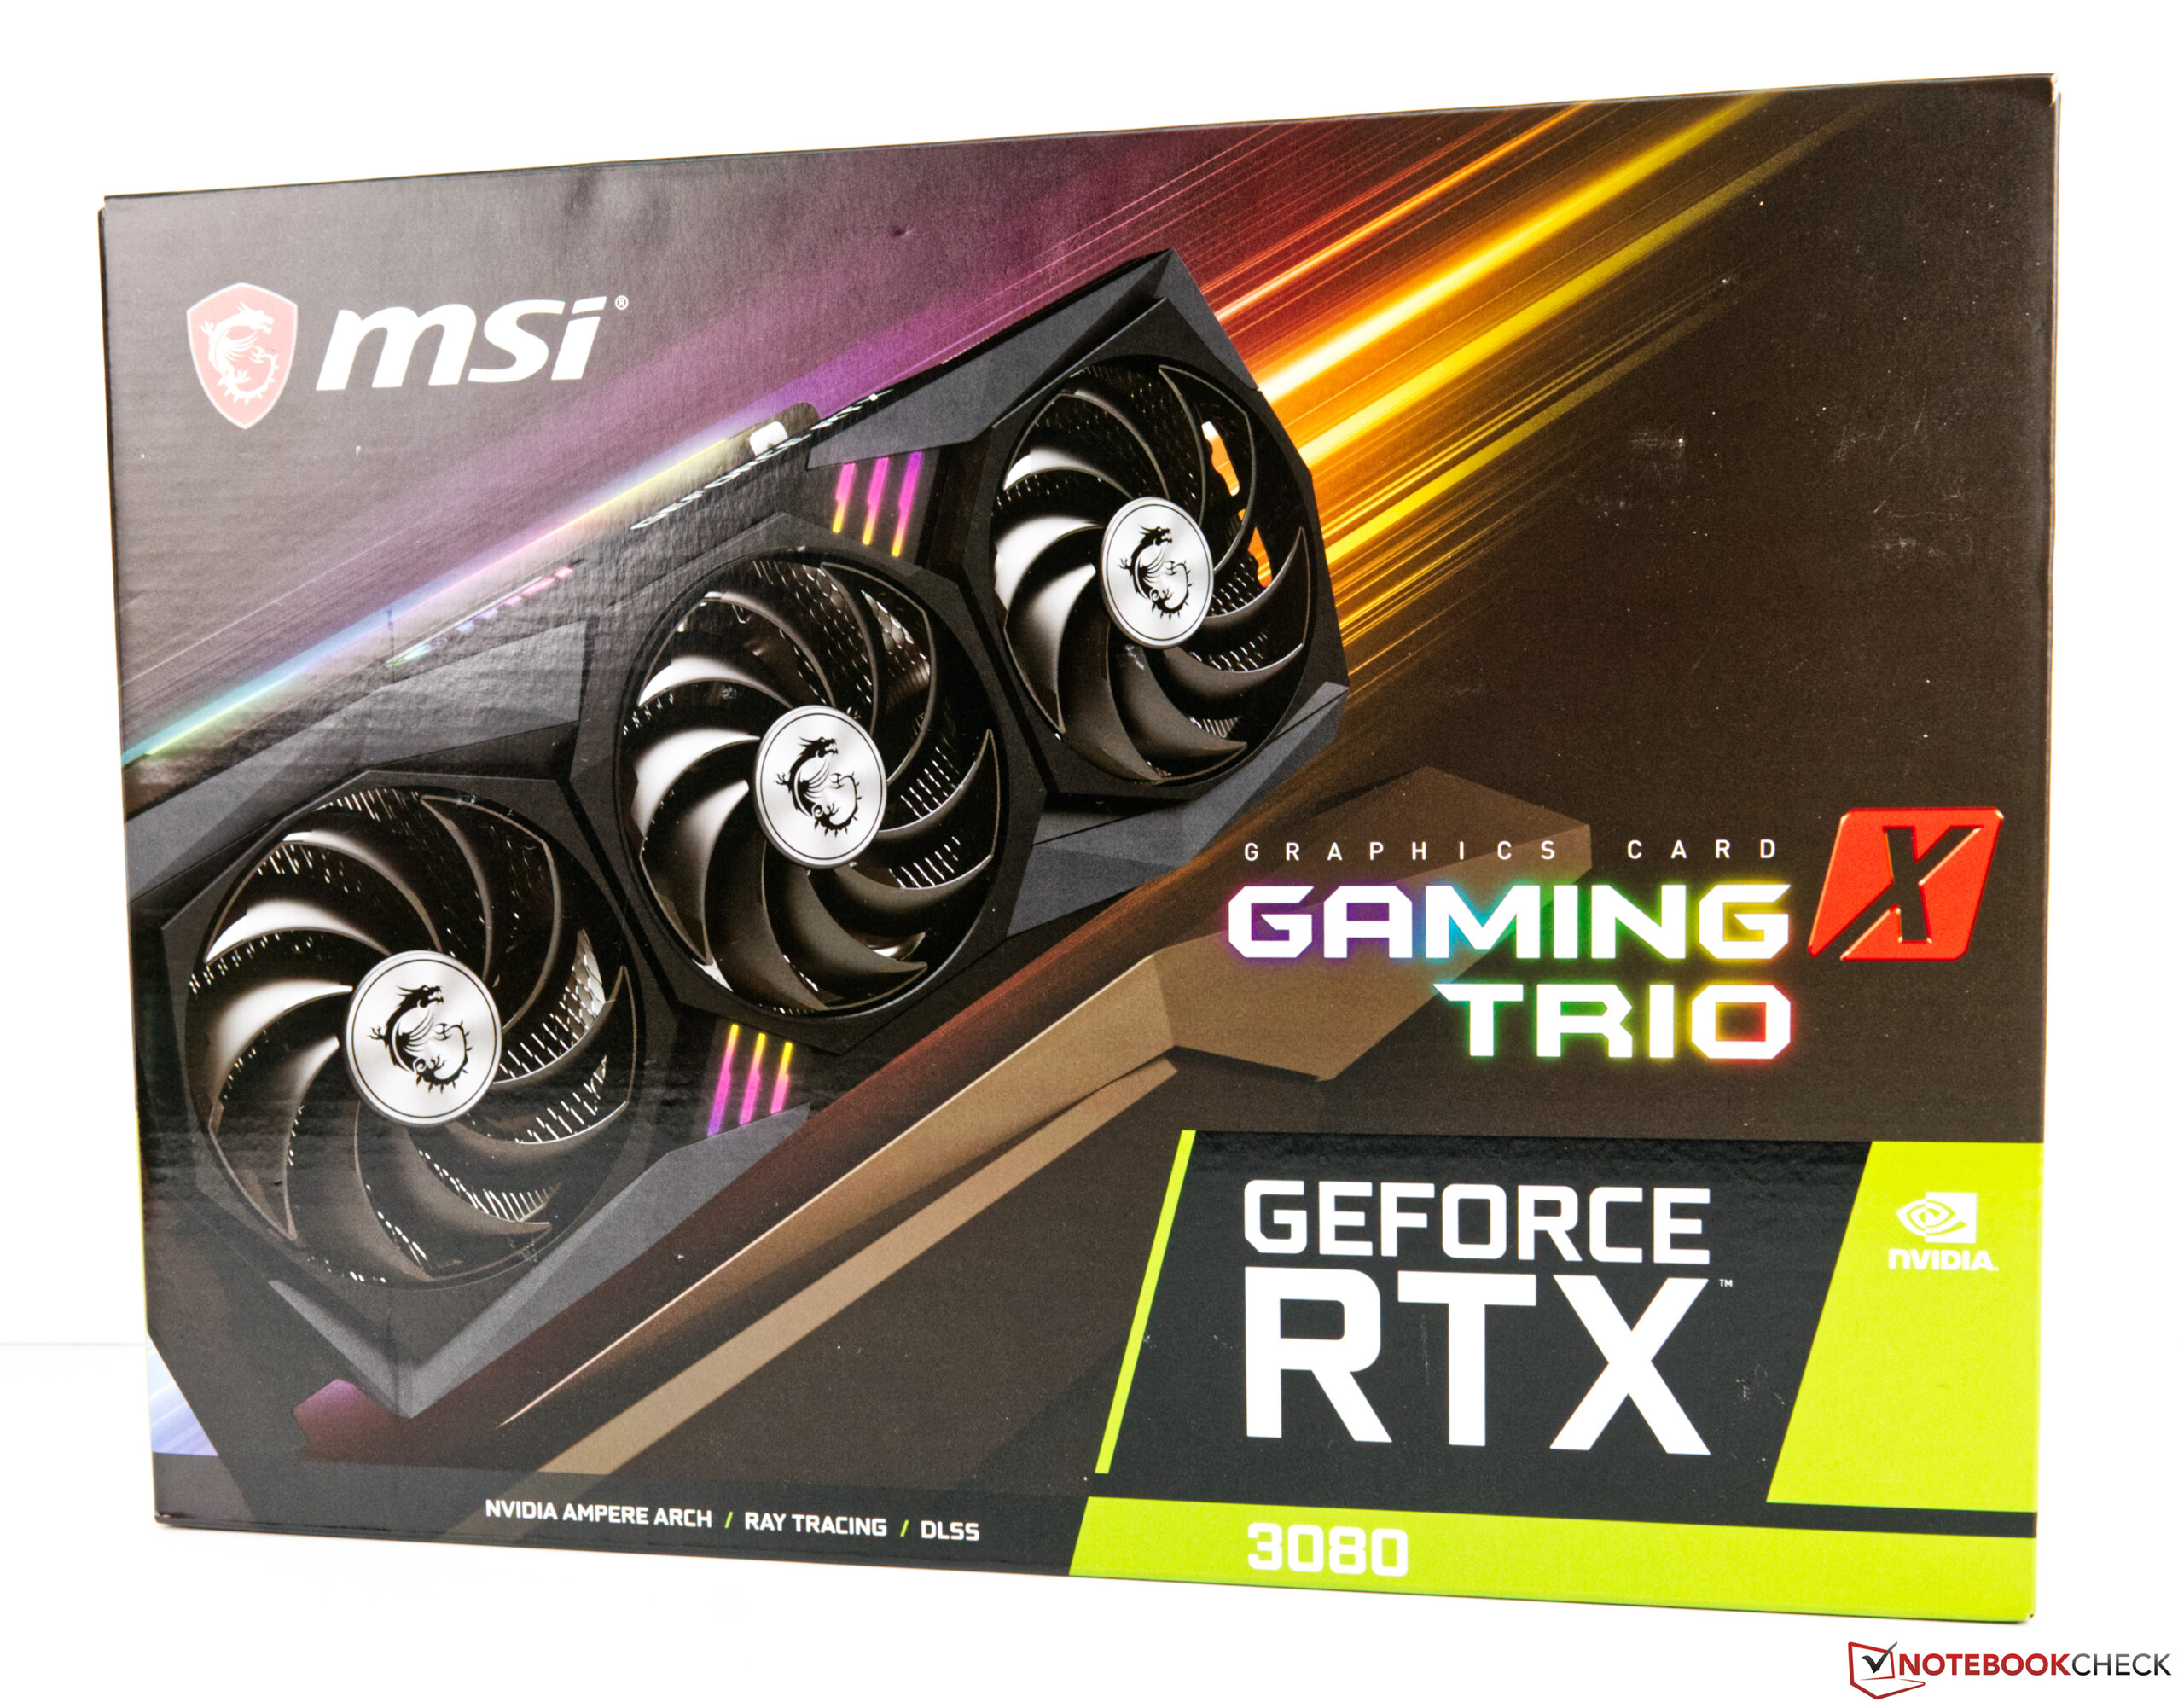 MSI GeForce RTX 3080 Gaming X Trio 10G desktop graphics card in